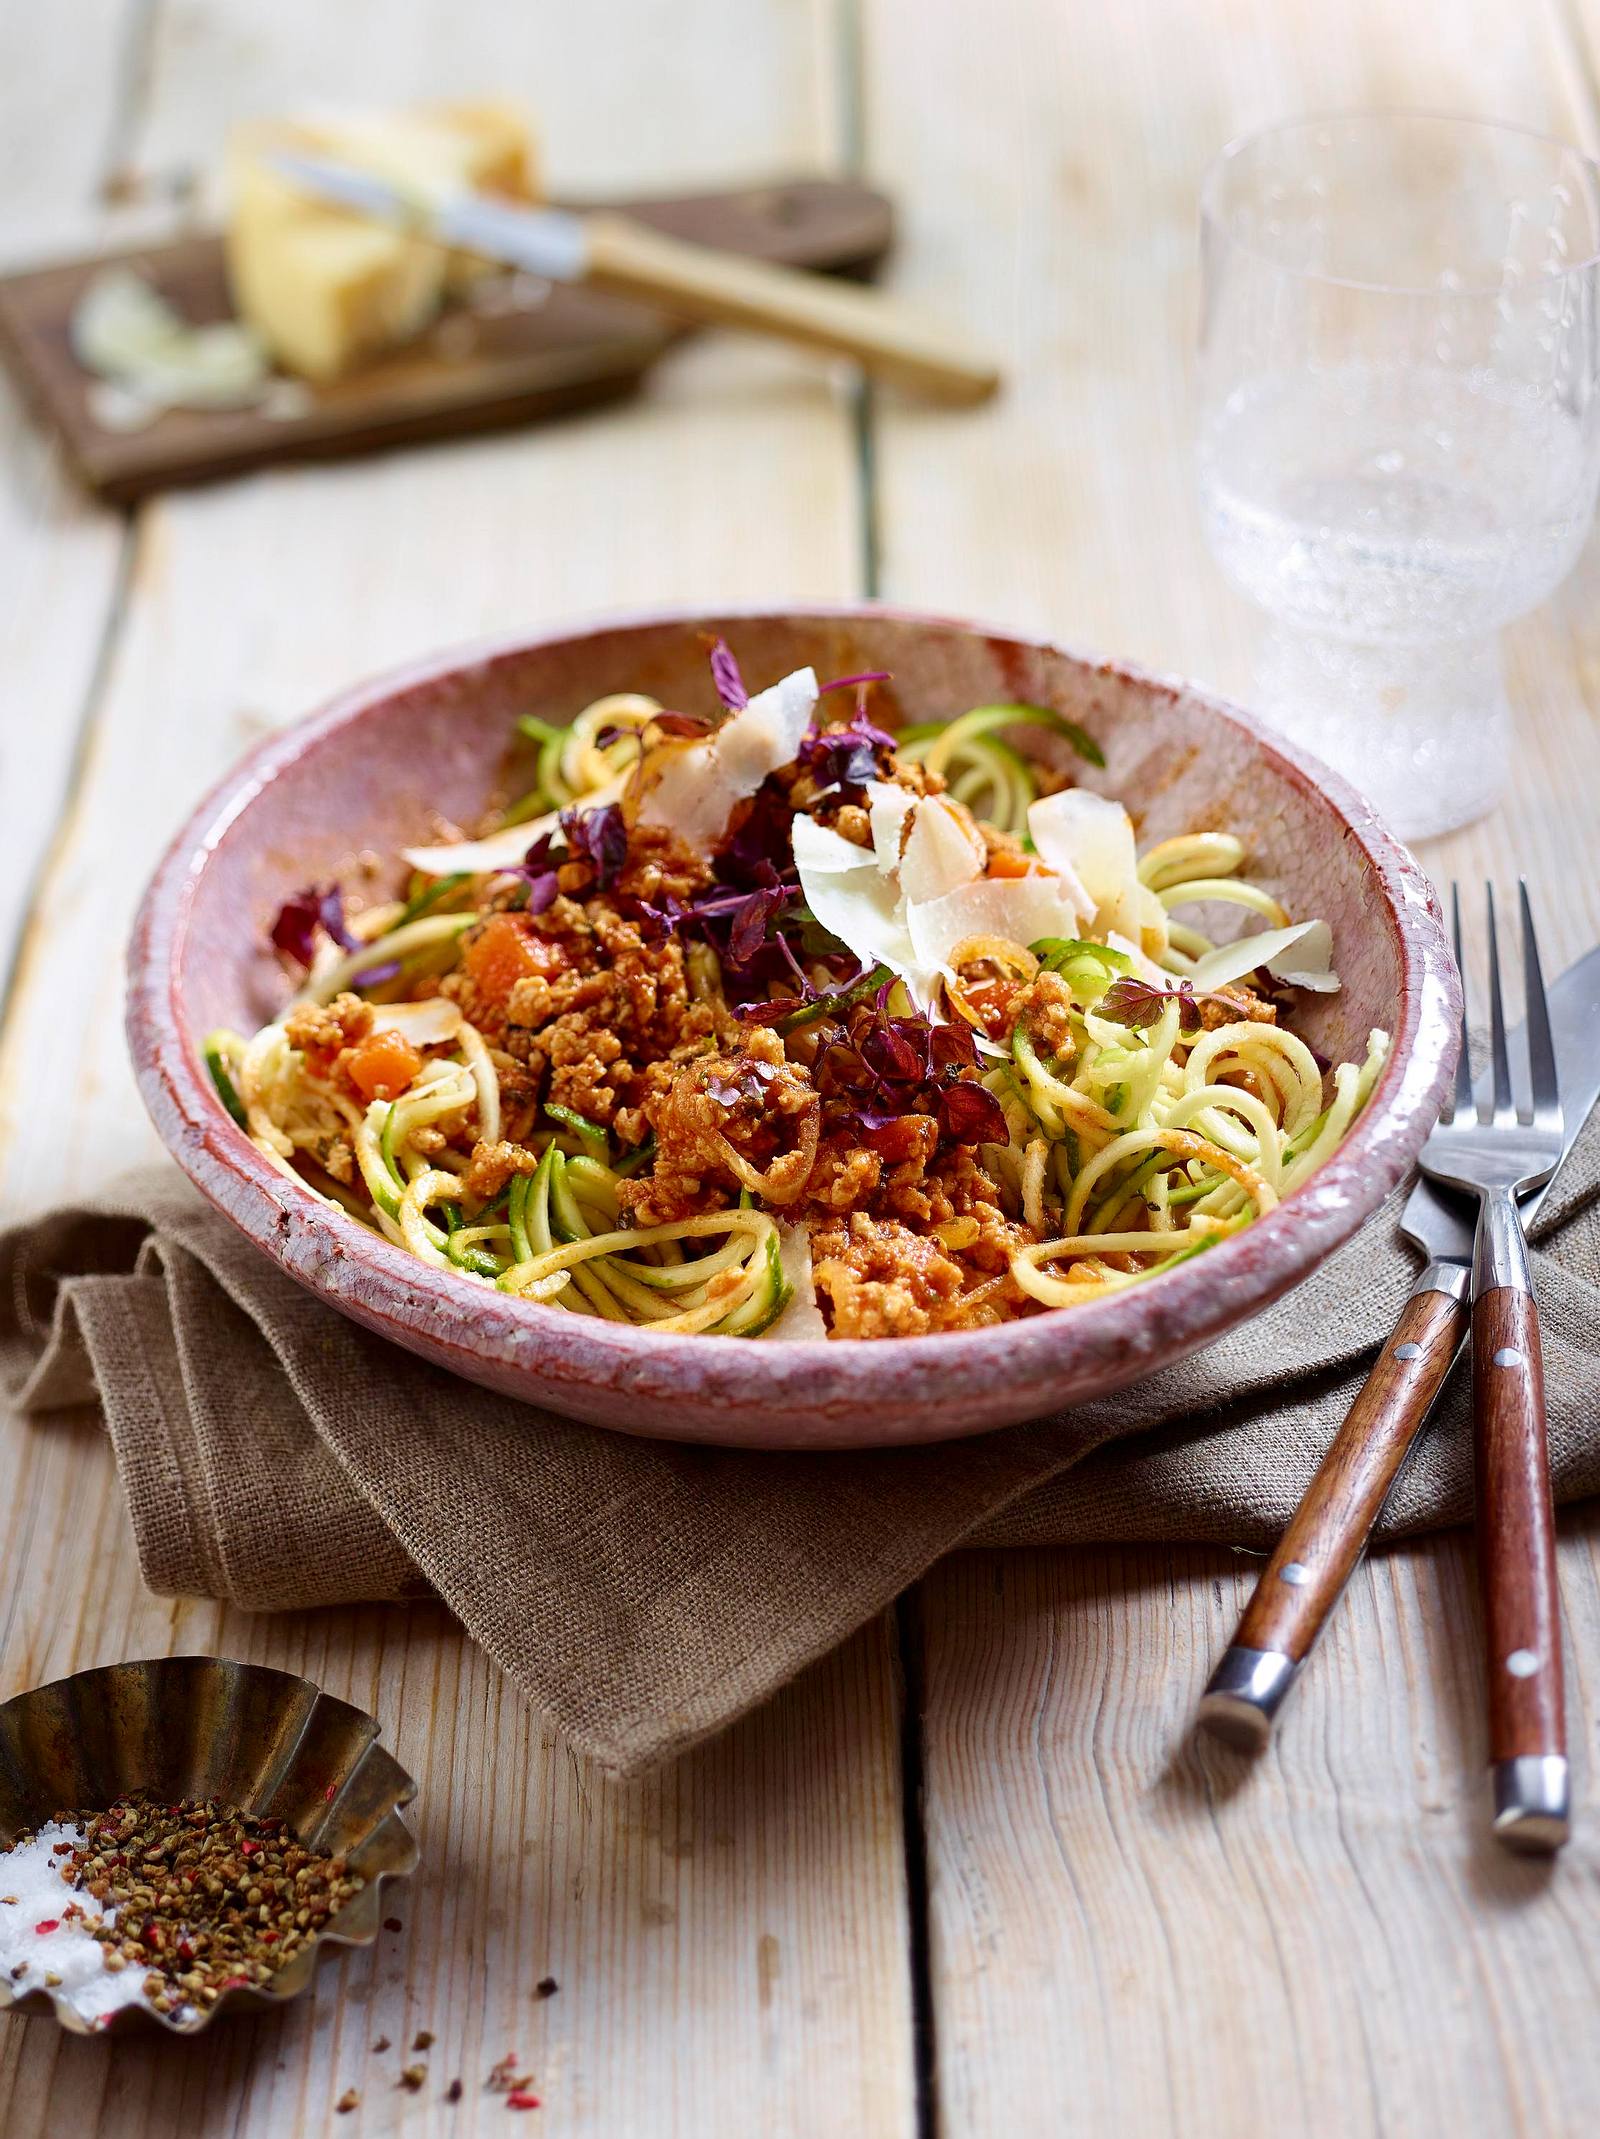 Zucchini-Spaghetti mit Geflügel-Bolognese Rezept | LECKER